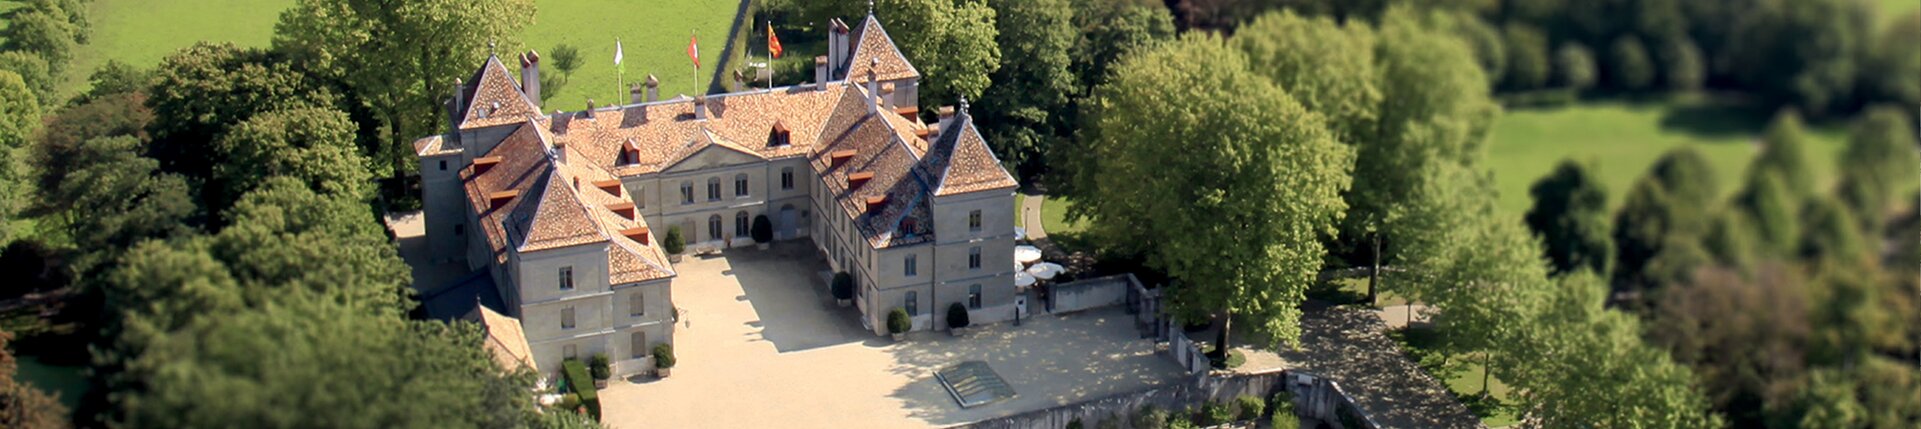 The Château de Prangins